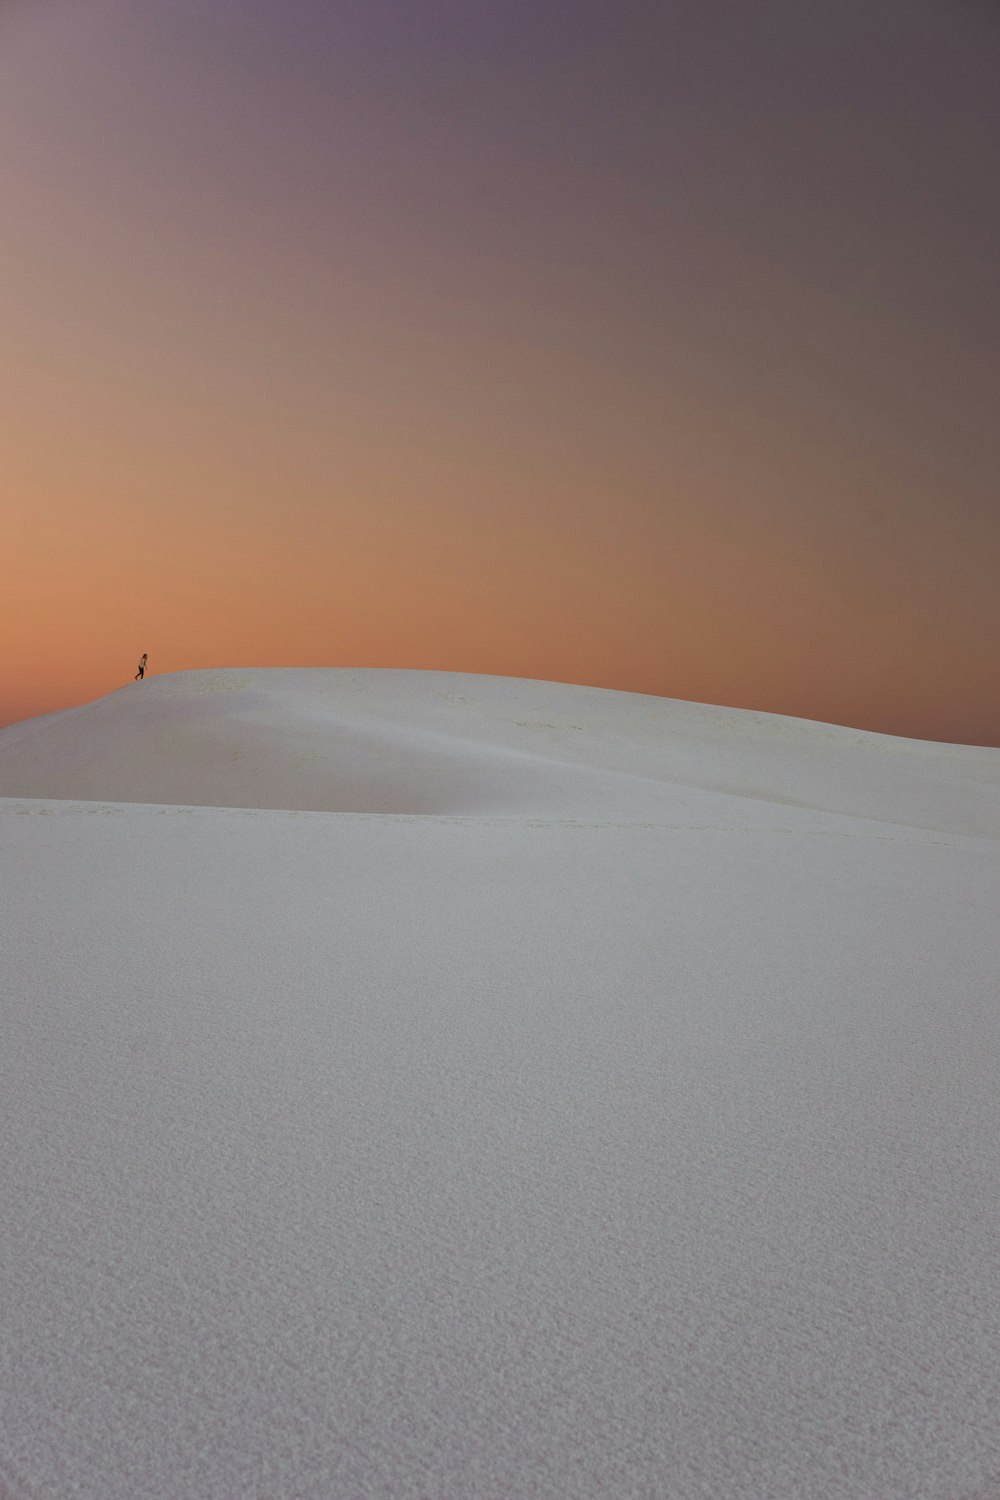 Desert Dark Pictures | Download Free Images on Unsplash